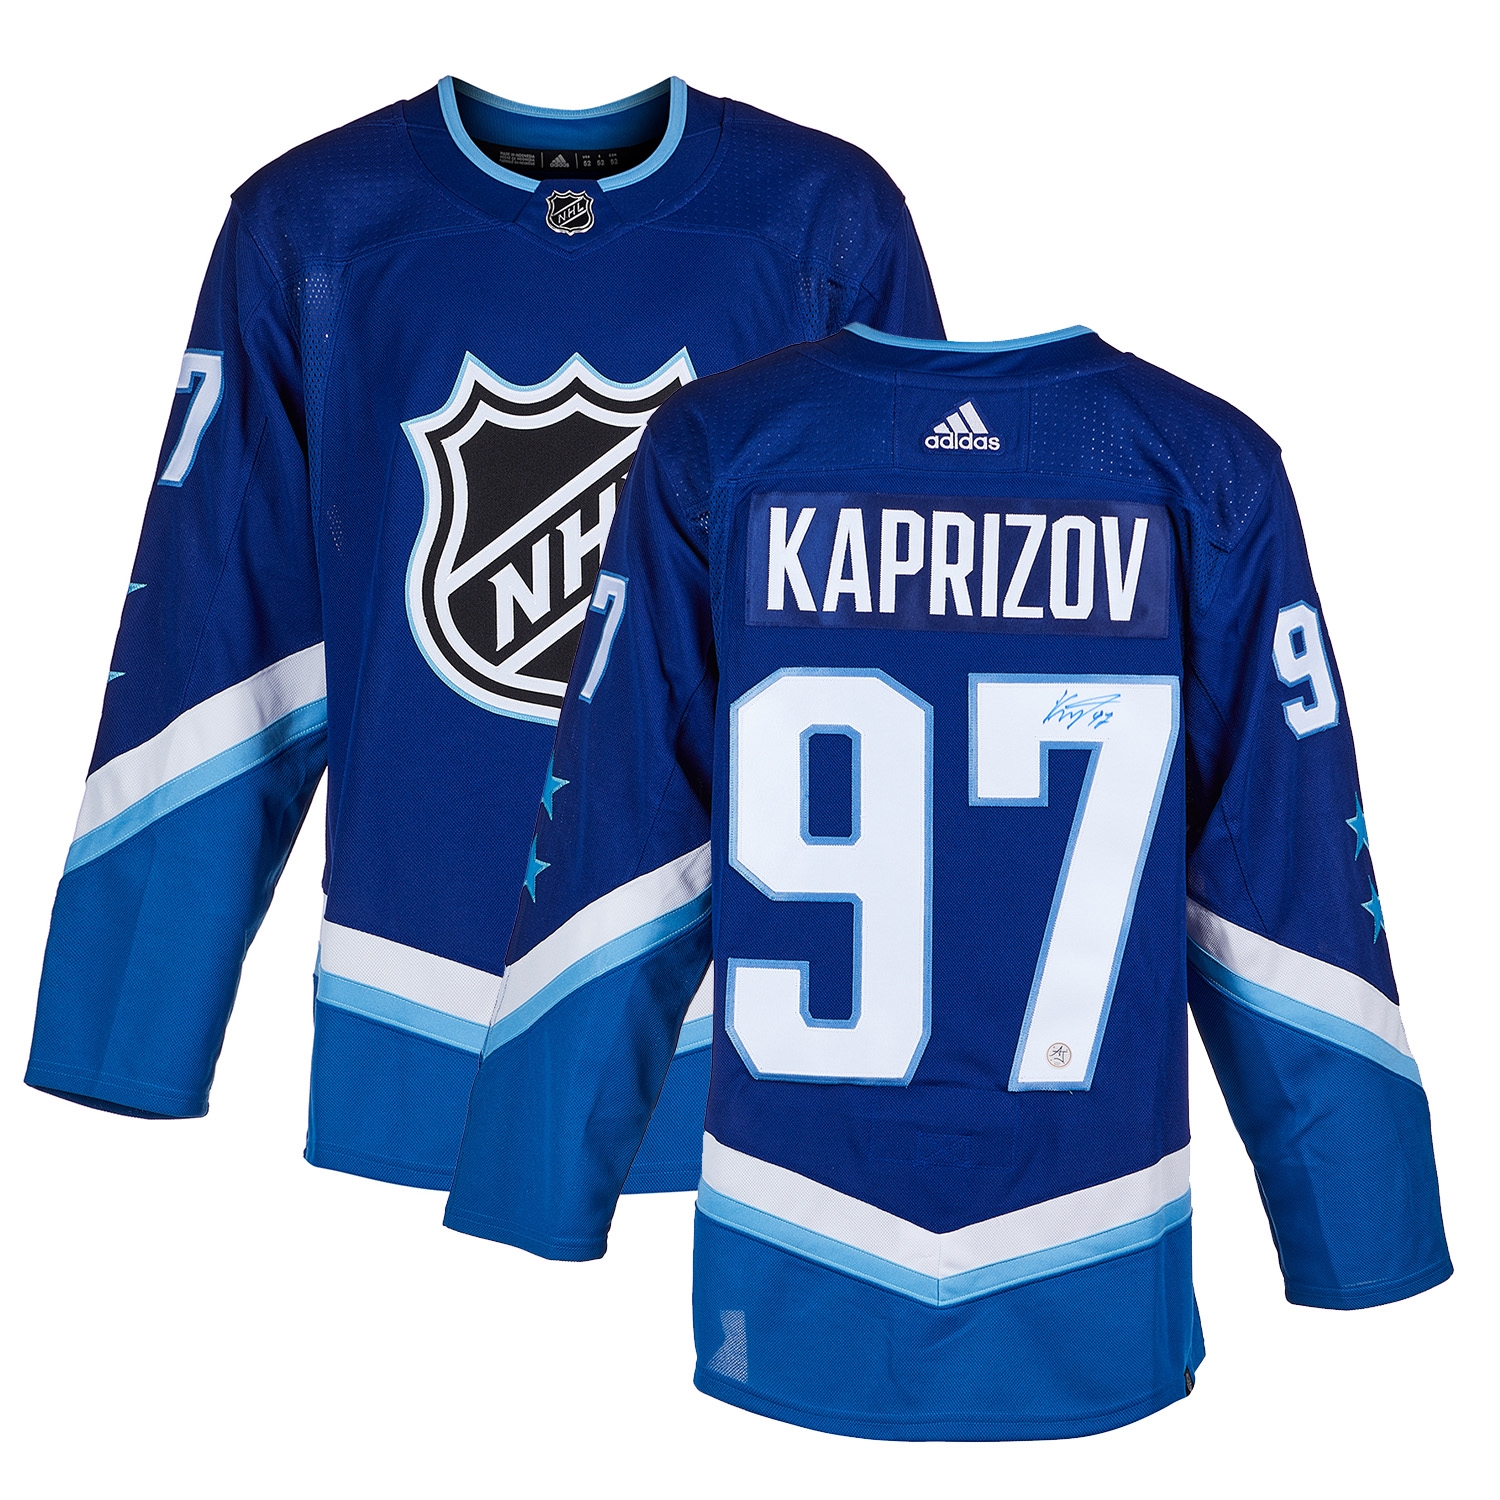 Kirill Kaprizov Signed 2022 NHL All-Star Game adidas Jersey